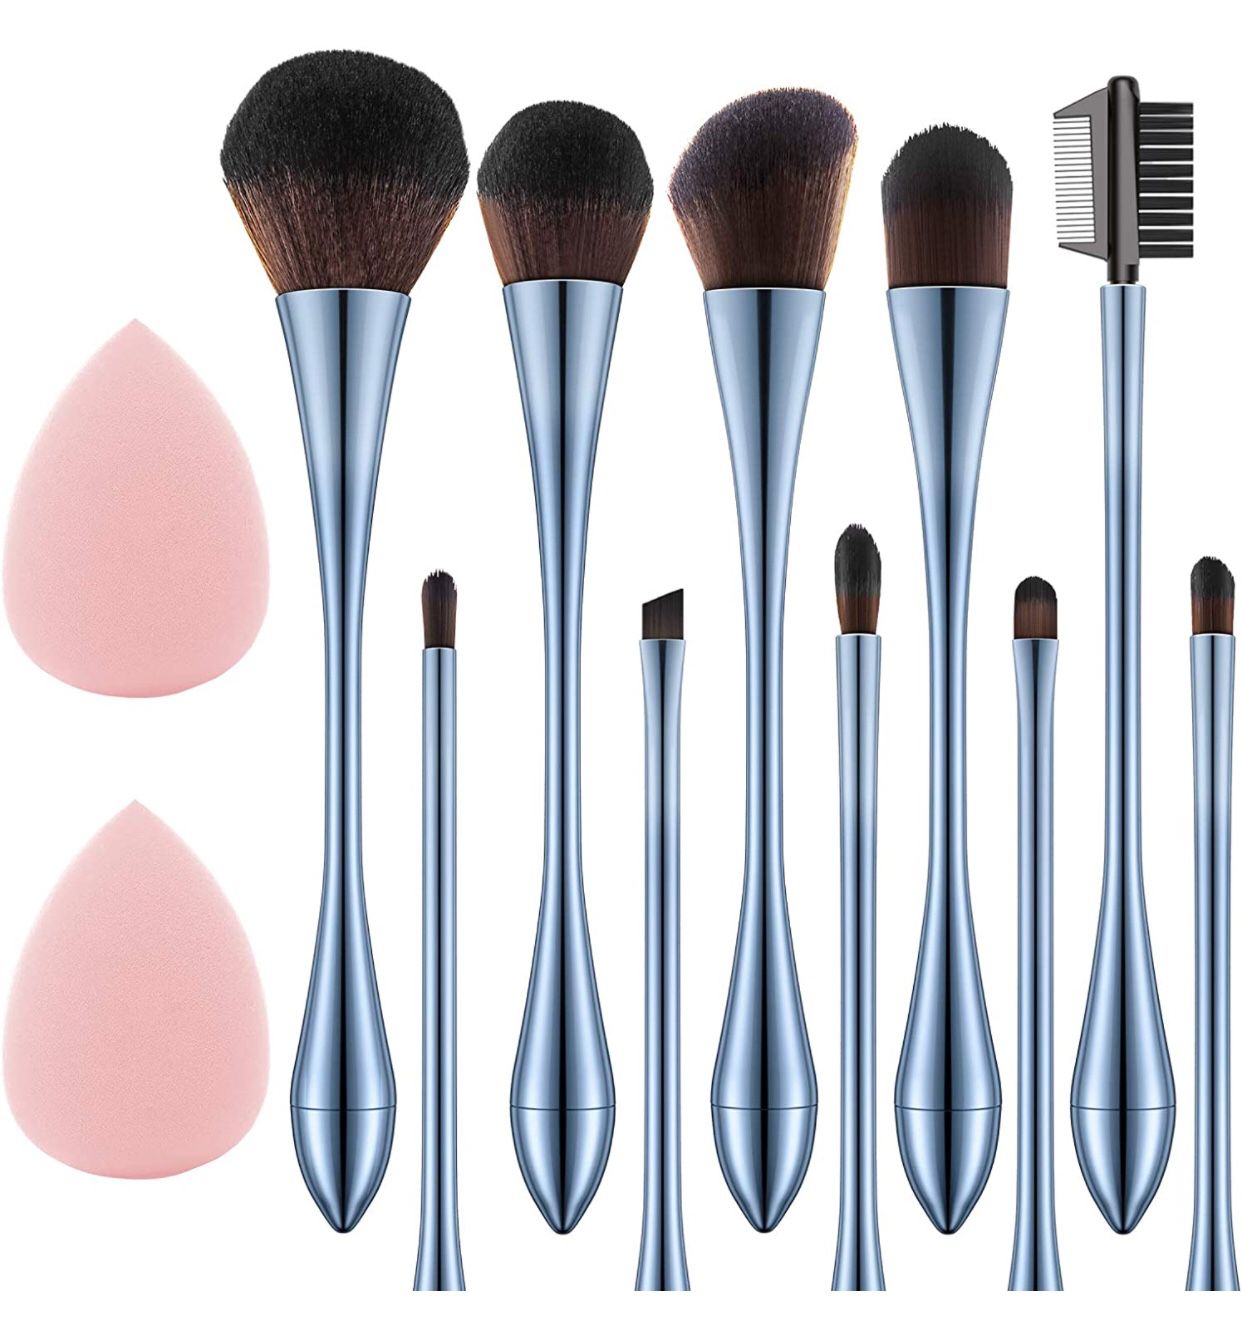 10Pcs Premium Synthetic Makeup Brush Set with 2 Sponge Blenders